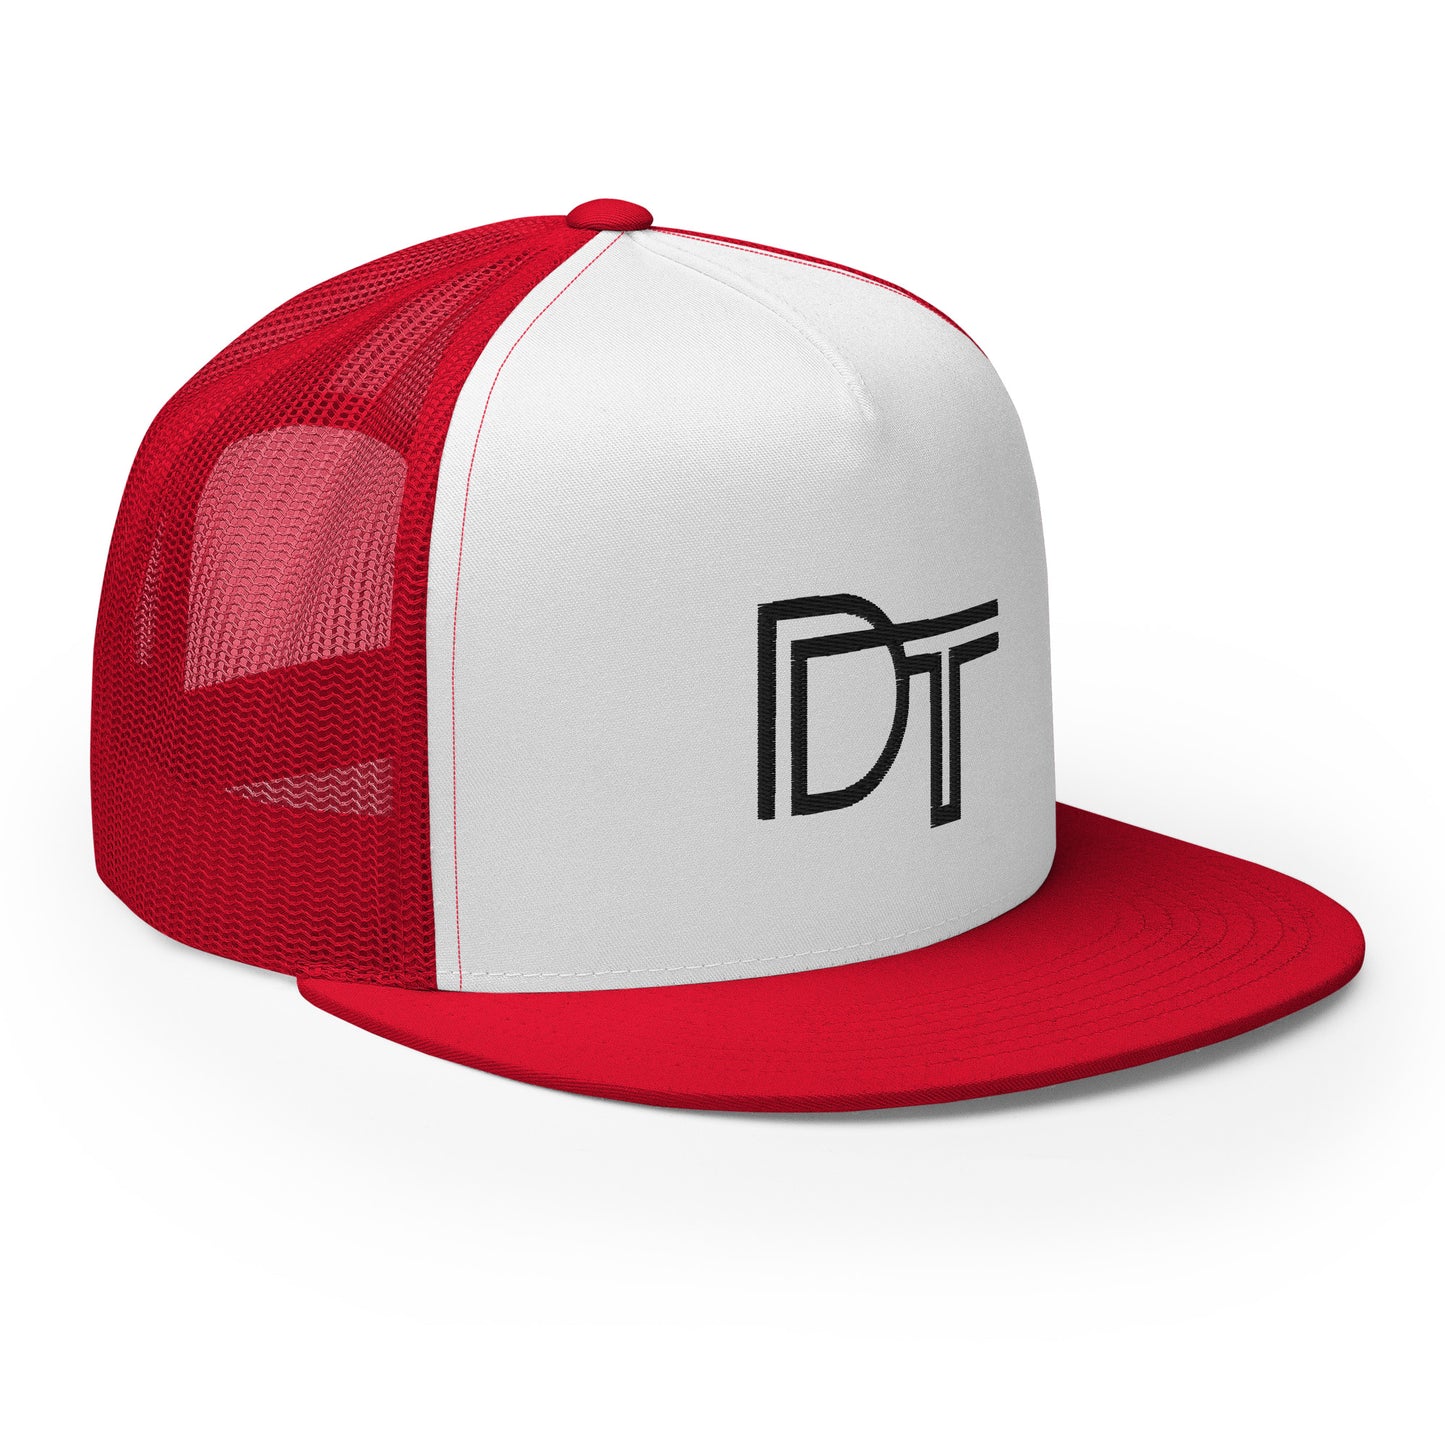 DT Sheffield "DS" Trucker Cap